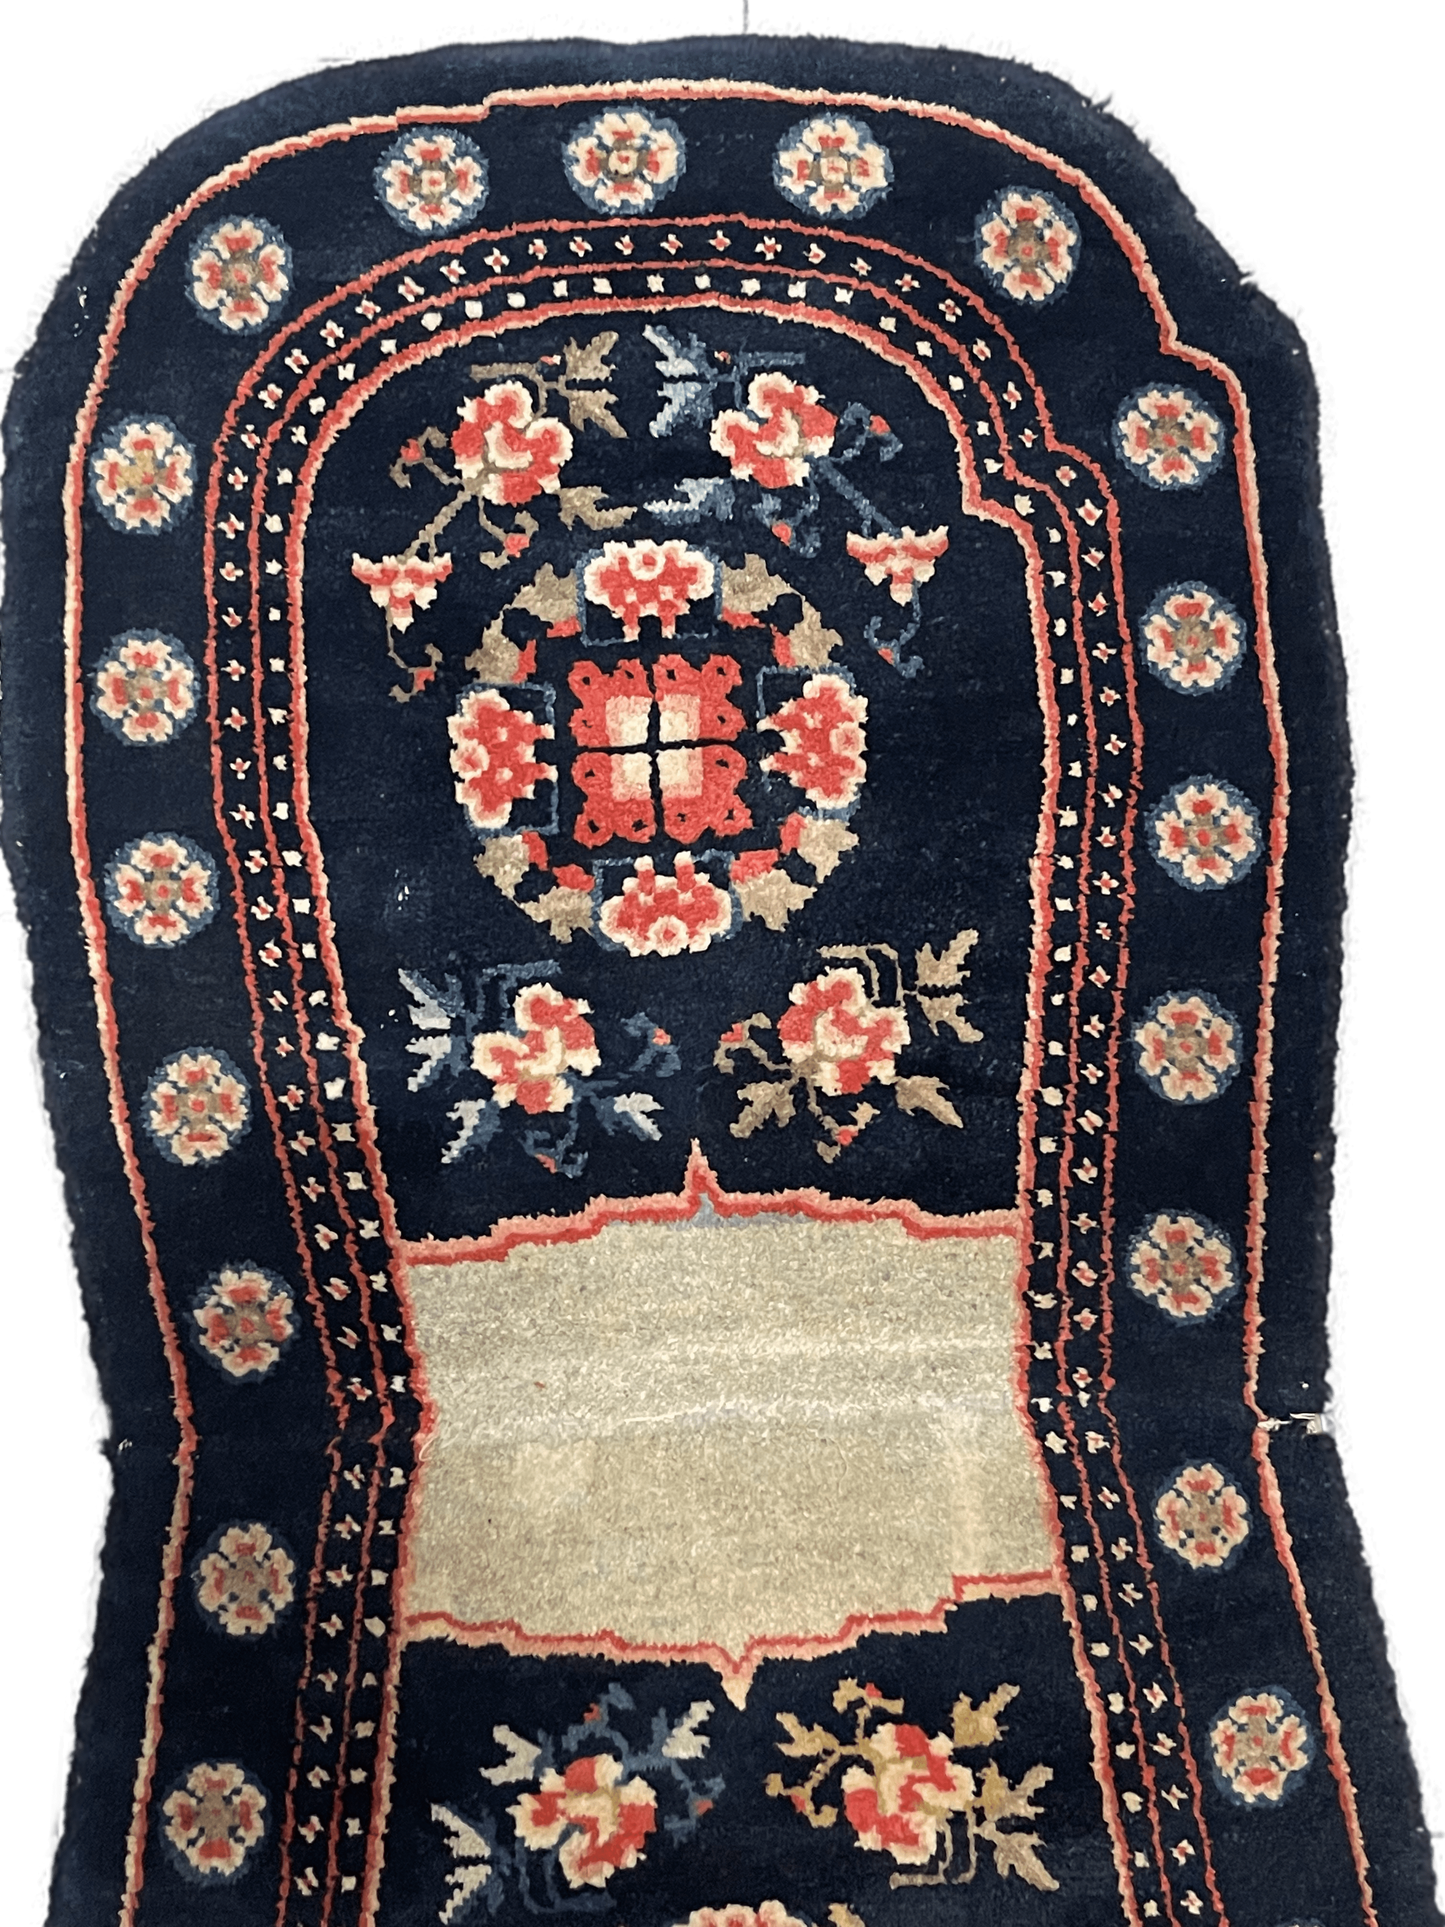 A vintage  Tibetan  indigo rounded woolen saddle rug